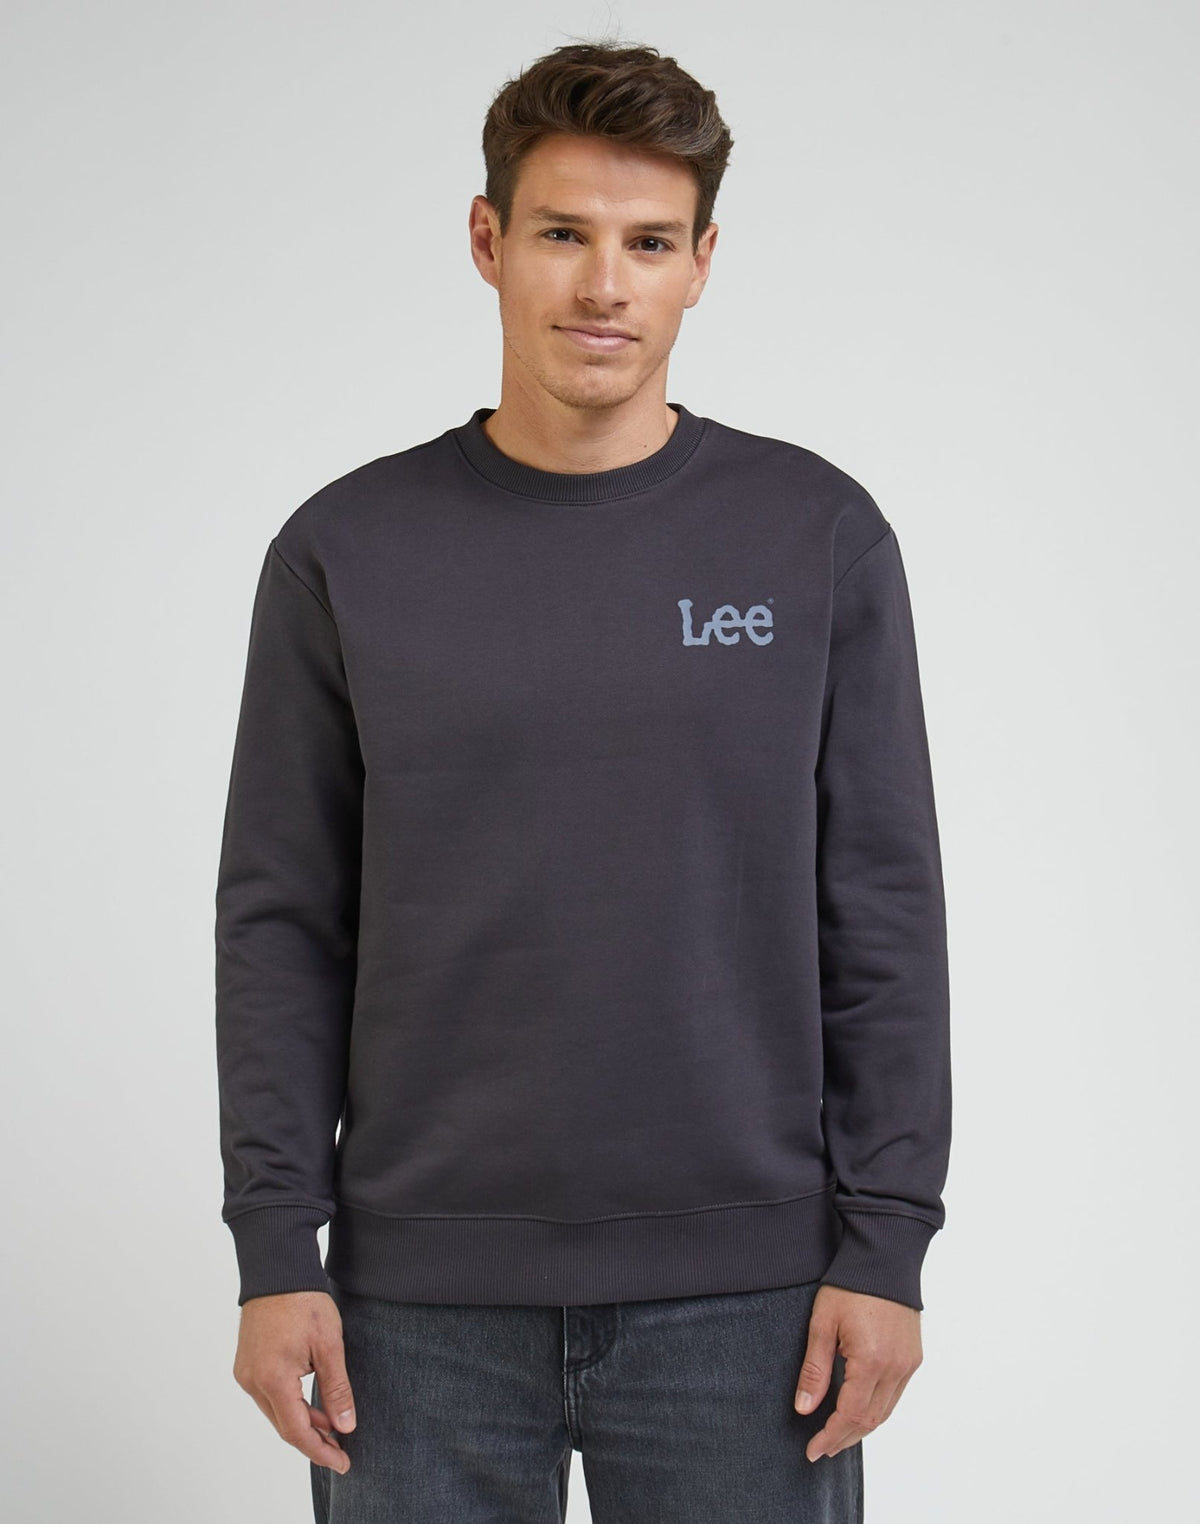 Wobbly Lee Sweatshirt in Washed Black - LEE Schweiz